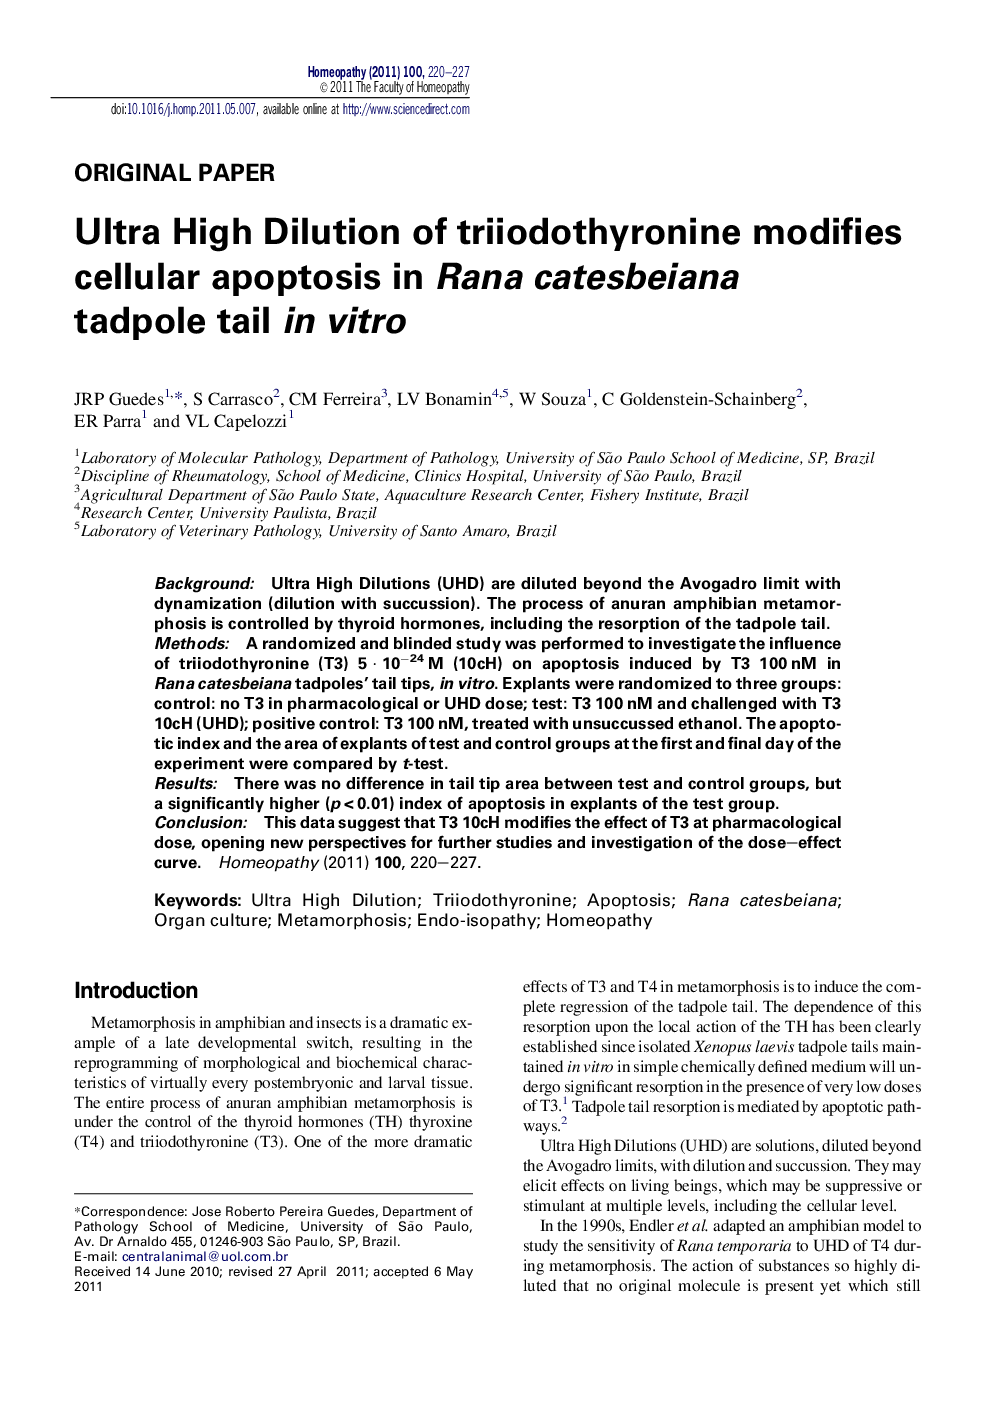 Ultra High Dilution of triiodothyronine modifies cellular apoptosis in Rana catesbeiana tadpole tail in vitro